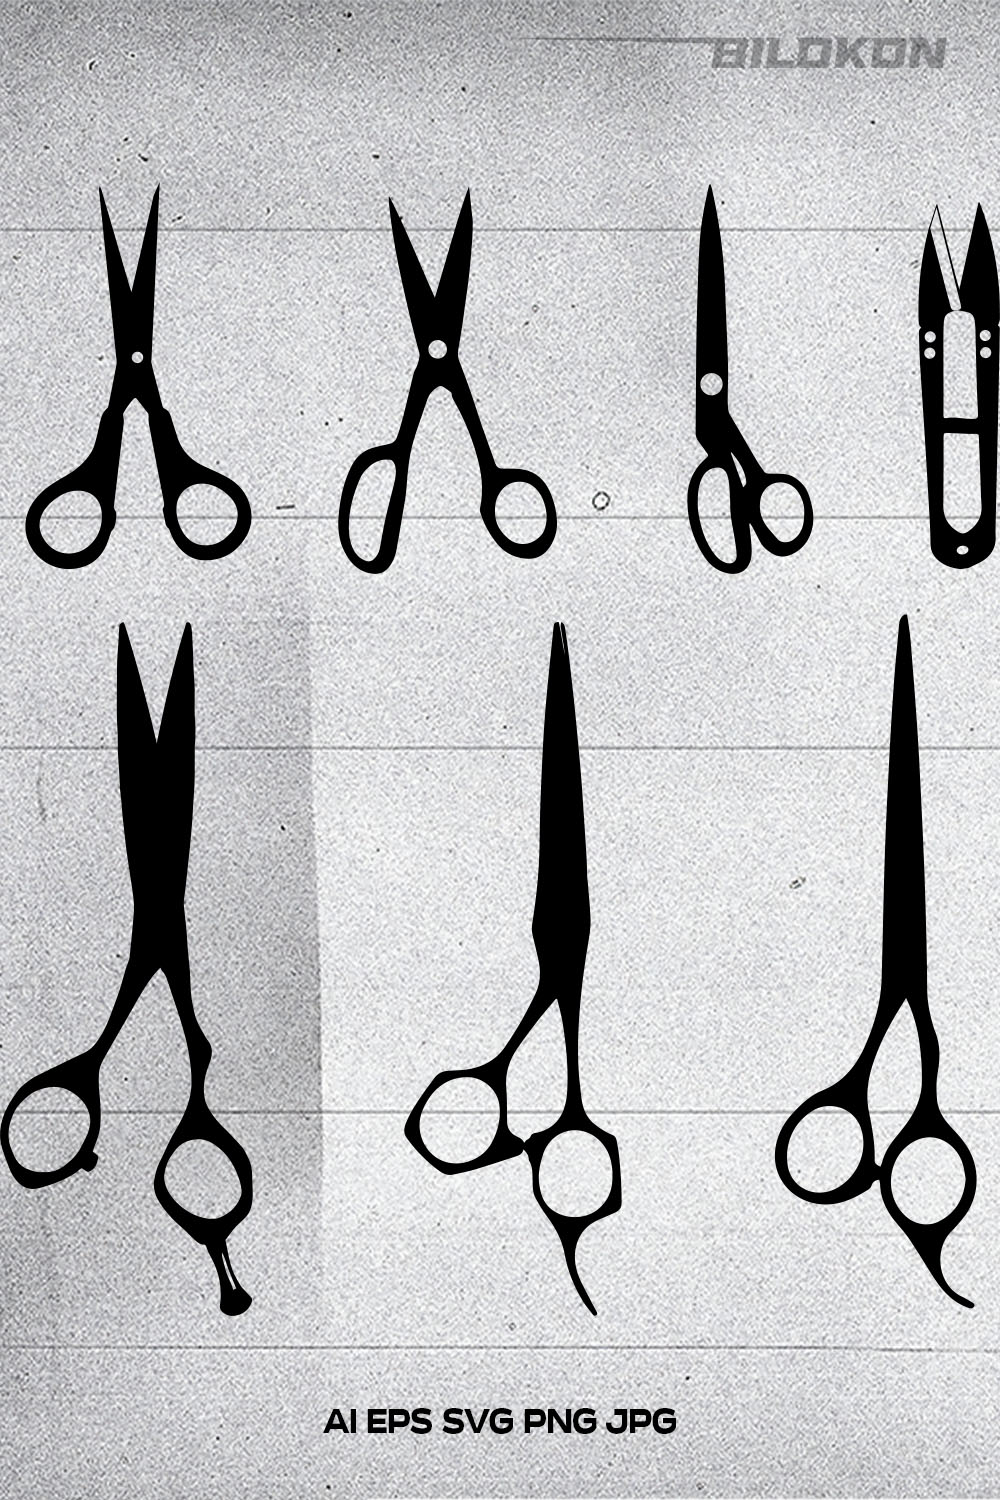 Scissors silhouette set icon, Barber scissors icon, SVG Vector pinterest preview image.